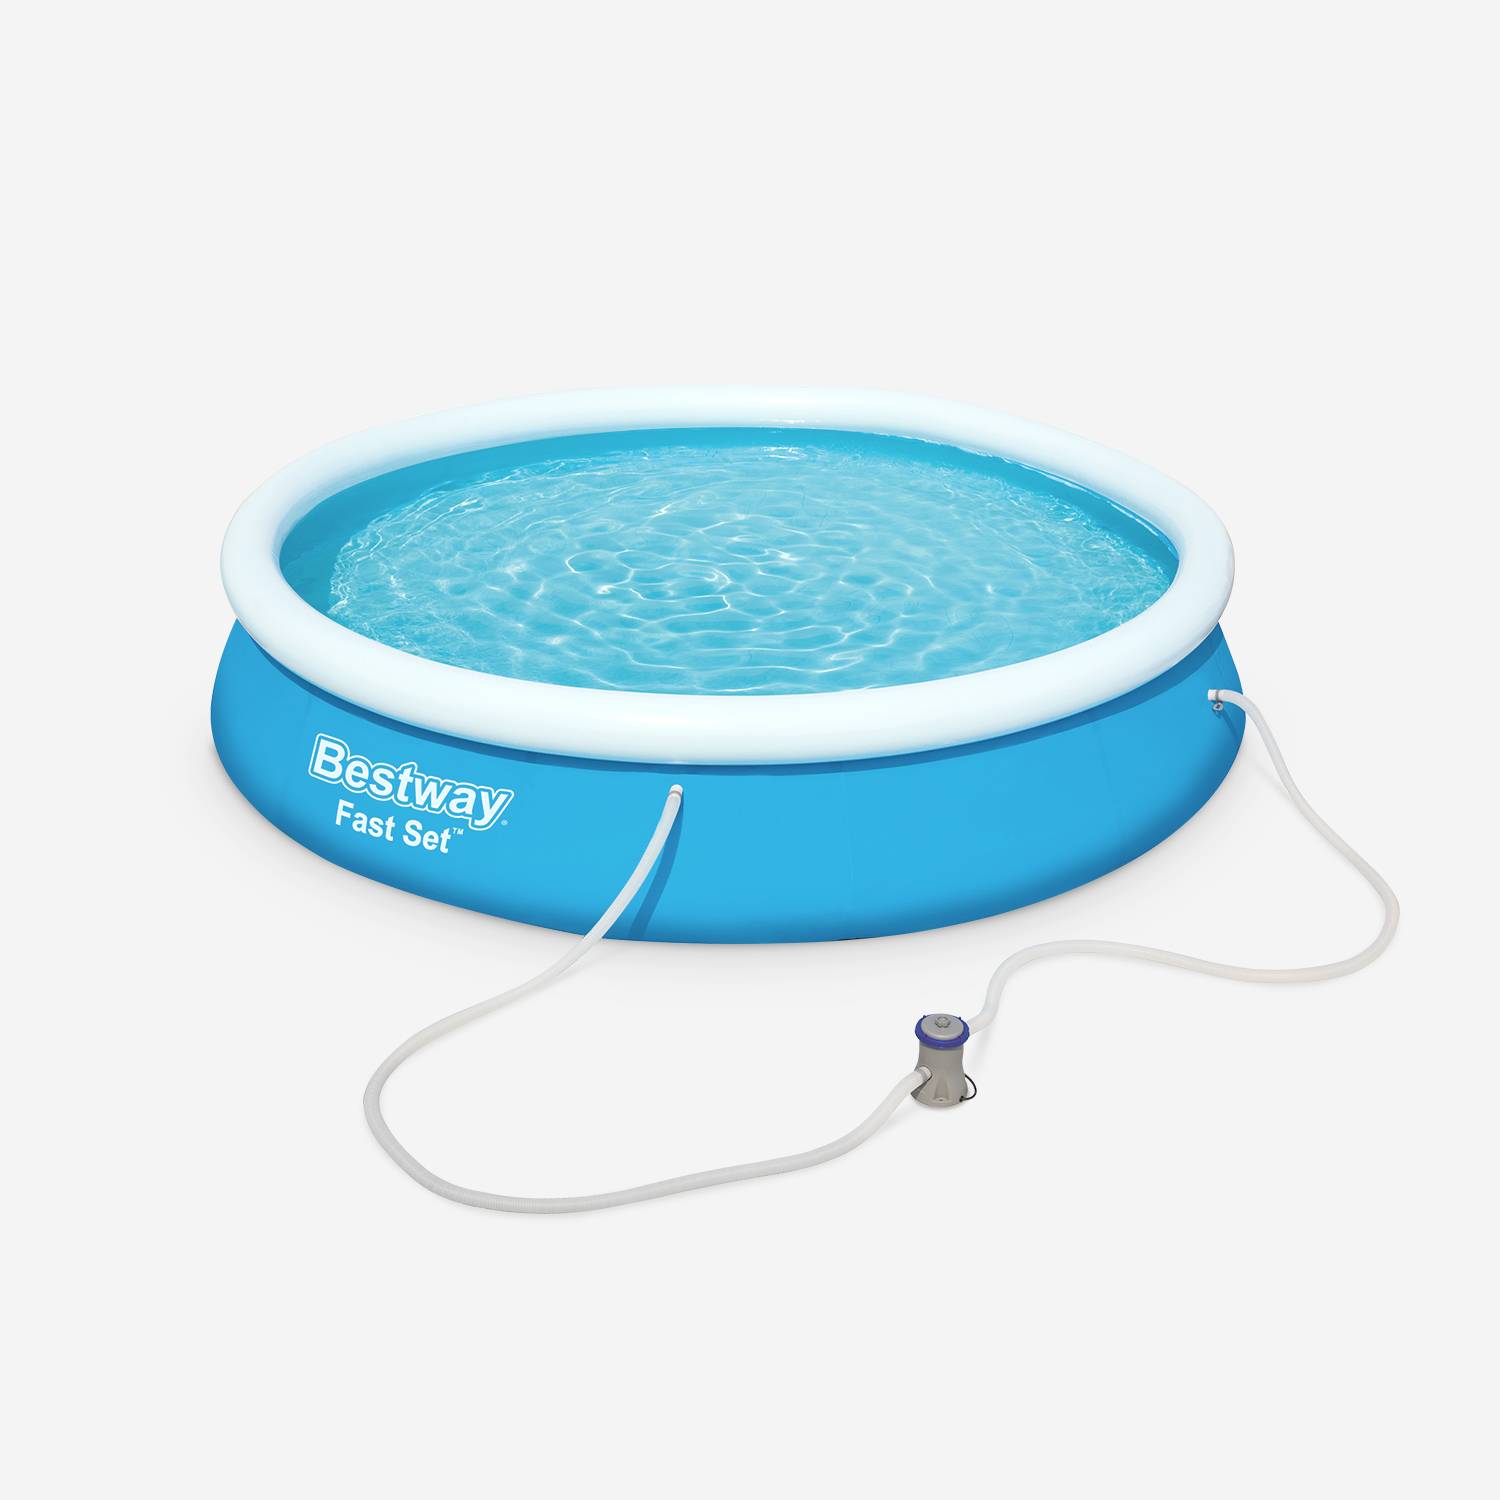 BESTWAY piscina gonfiabile autoportante blu - Jade ⌀ 360 x 76 cm - piscina fuori terra rotonda autoportante con filtro a cartuccia  + 1 cartuccia inclusa Photo2